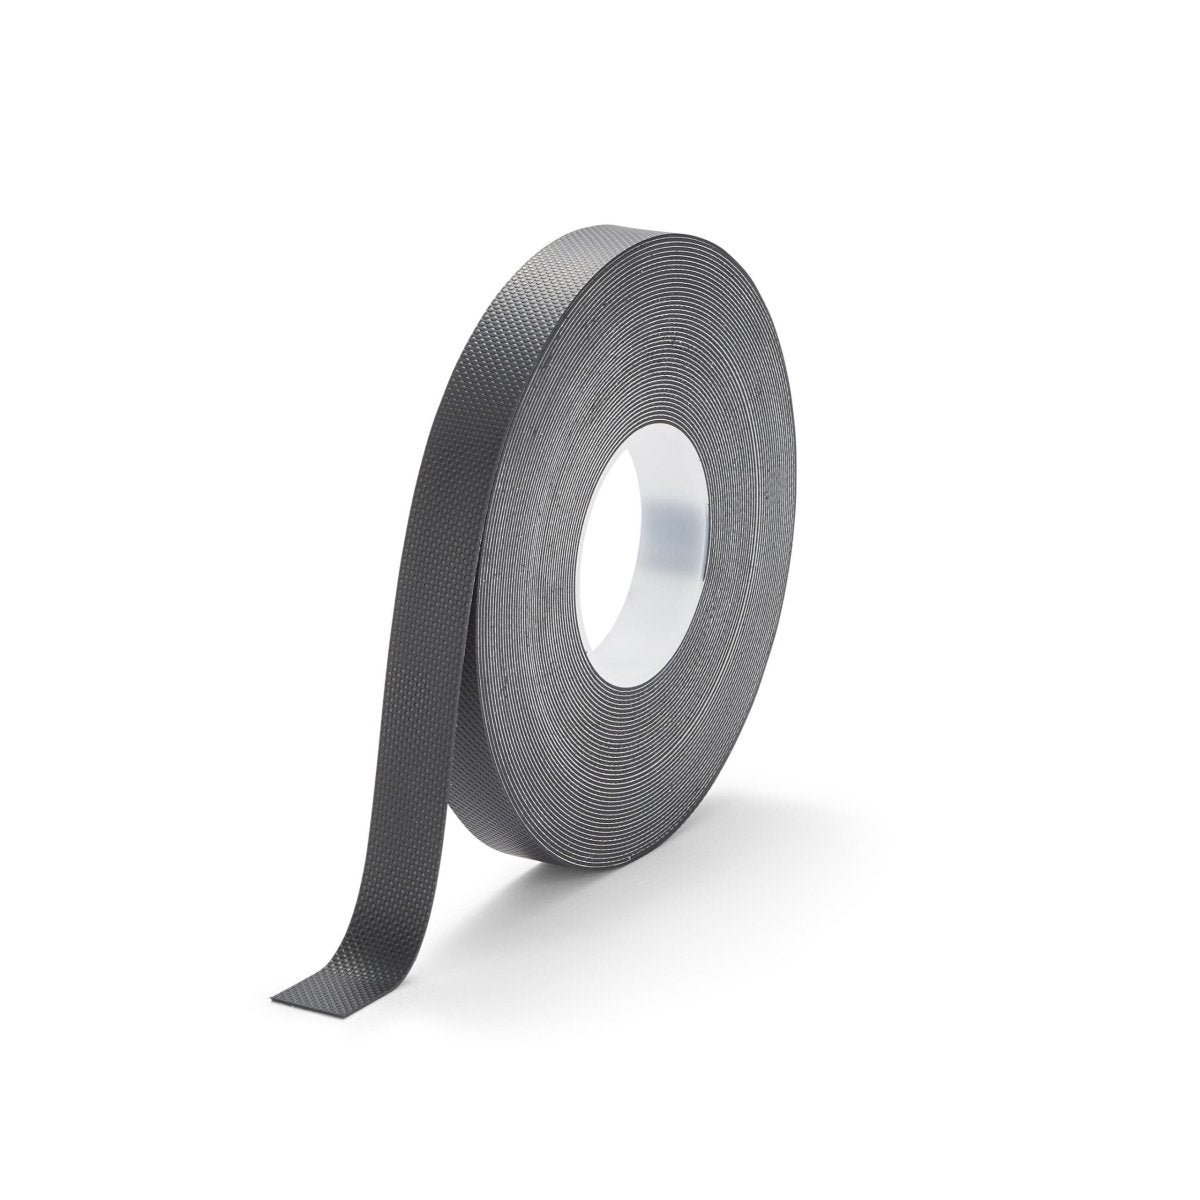 Handrail Grip Tape - Black - Slips Away - H3418N-Black-Handrail-Grip-Tape-25mm -